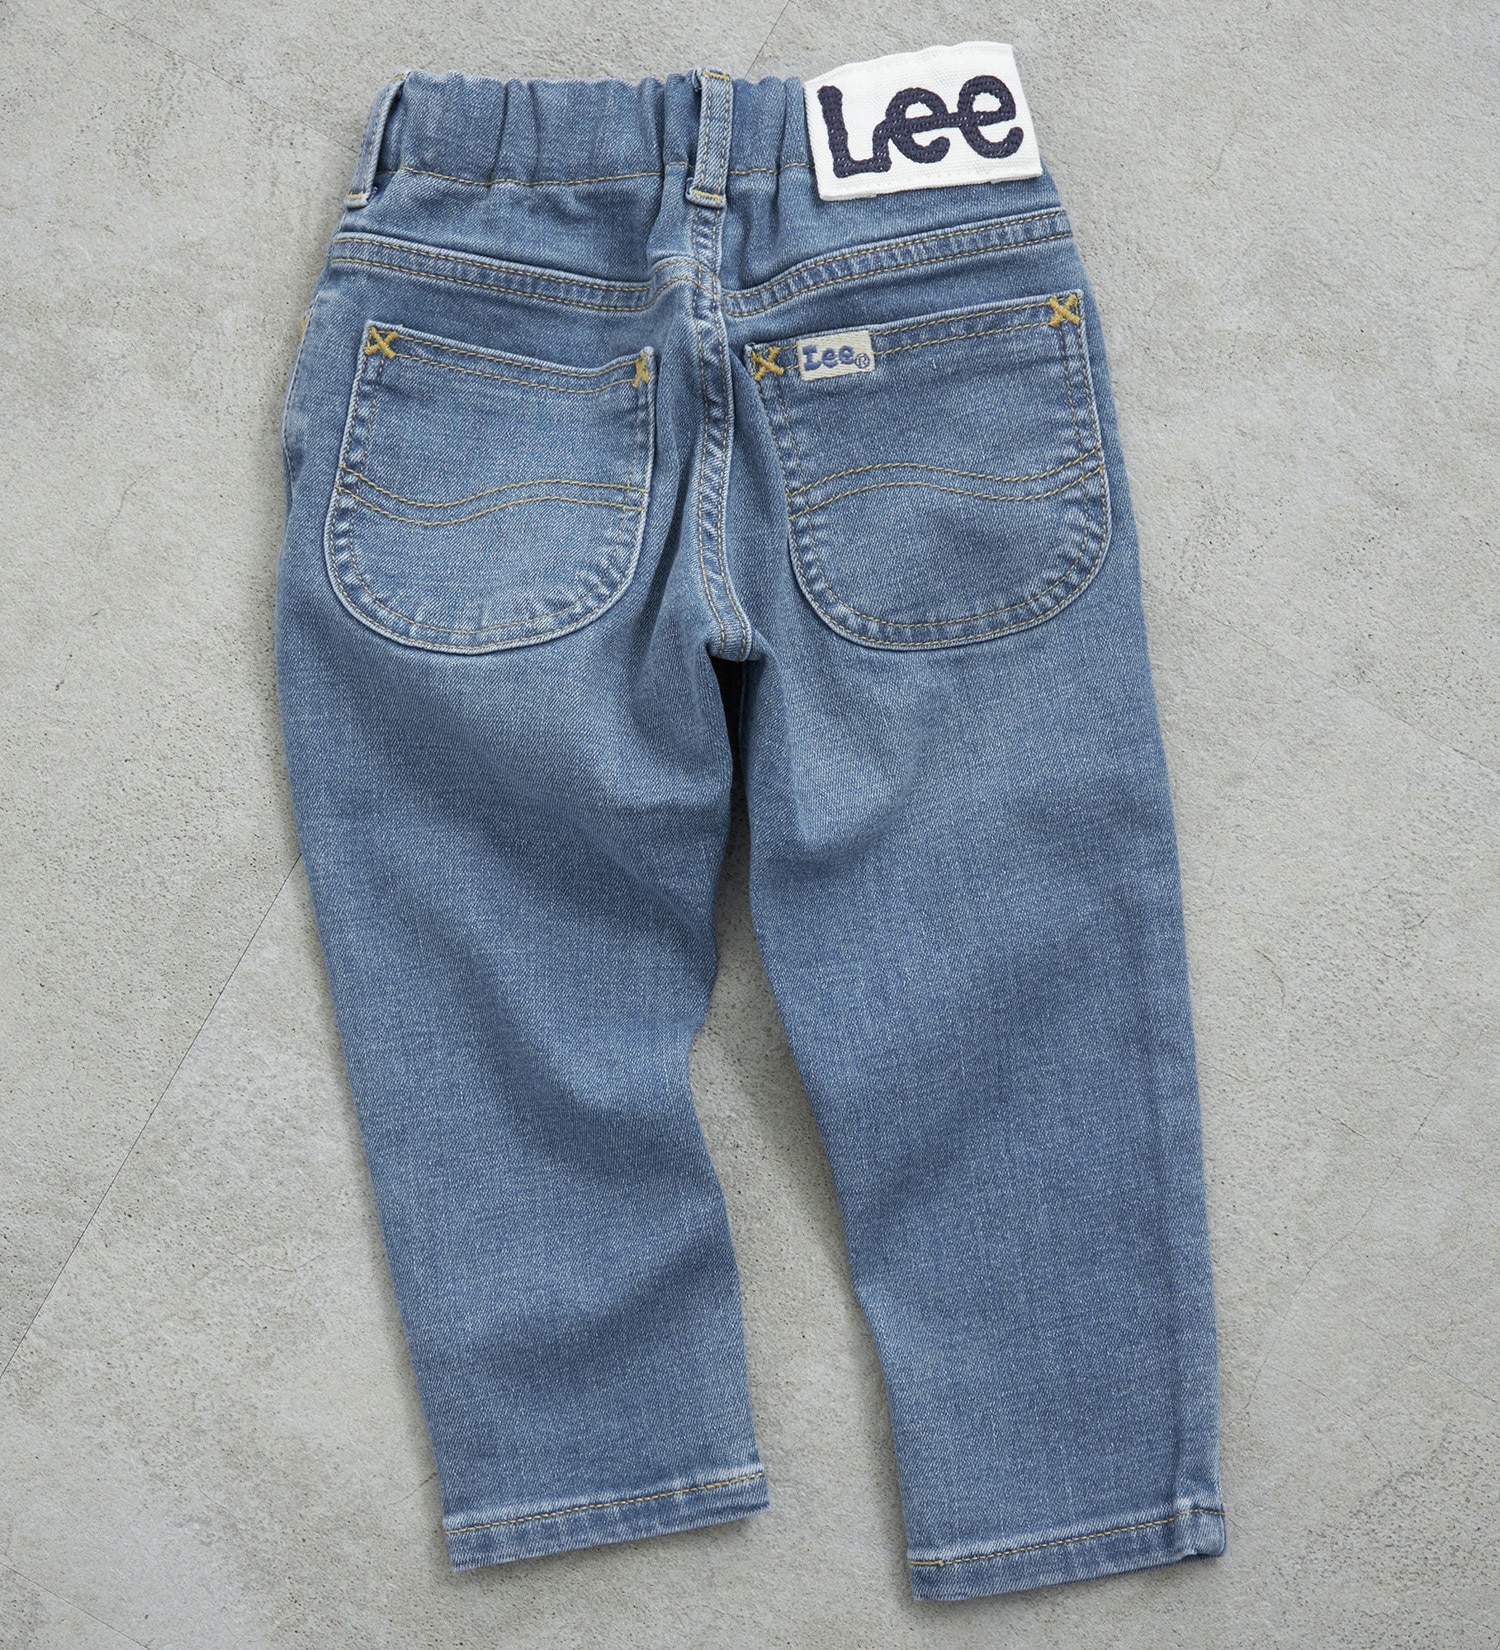 Lee(リー)の【80/90cm】ベビー ストレッチ/ストレートデニムパンツ|パンツ/デニムパンツ/キッズ|中色ブルー